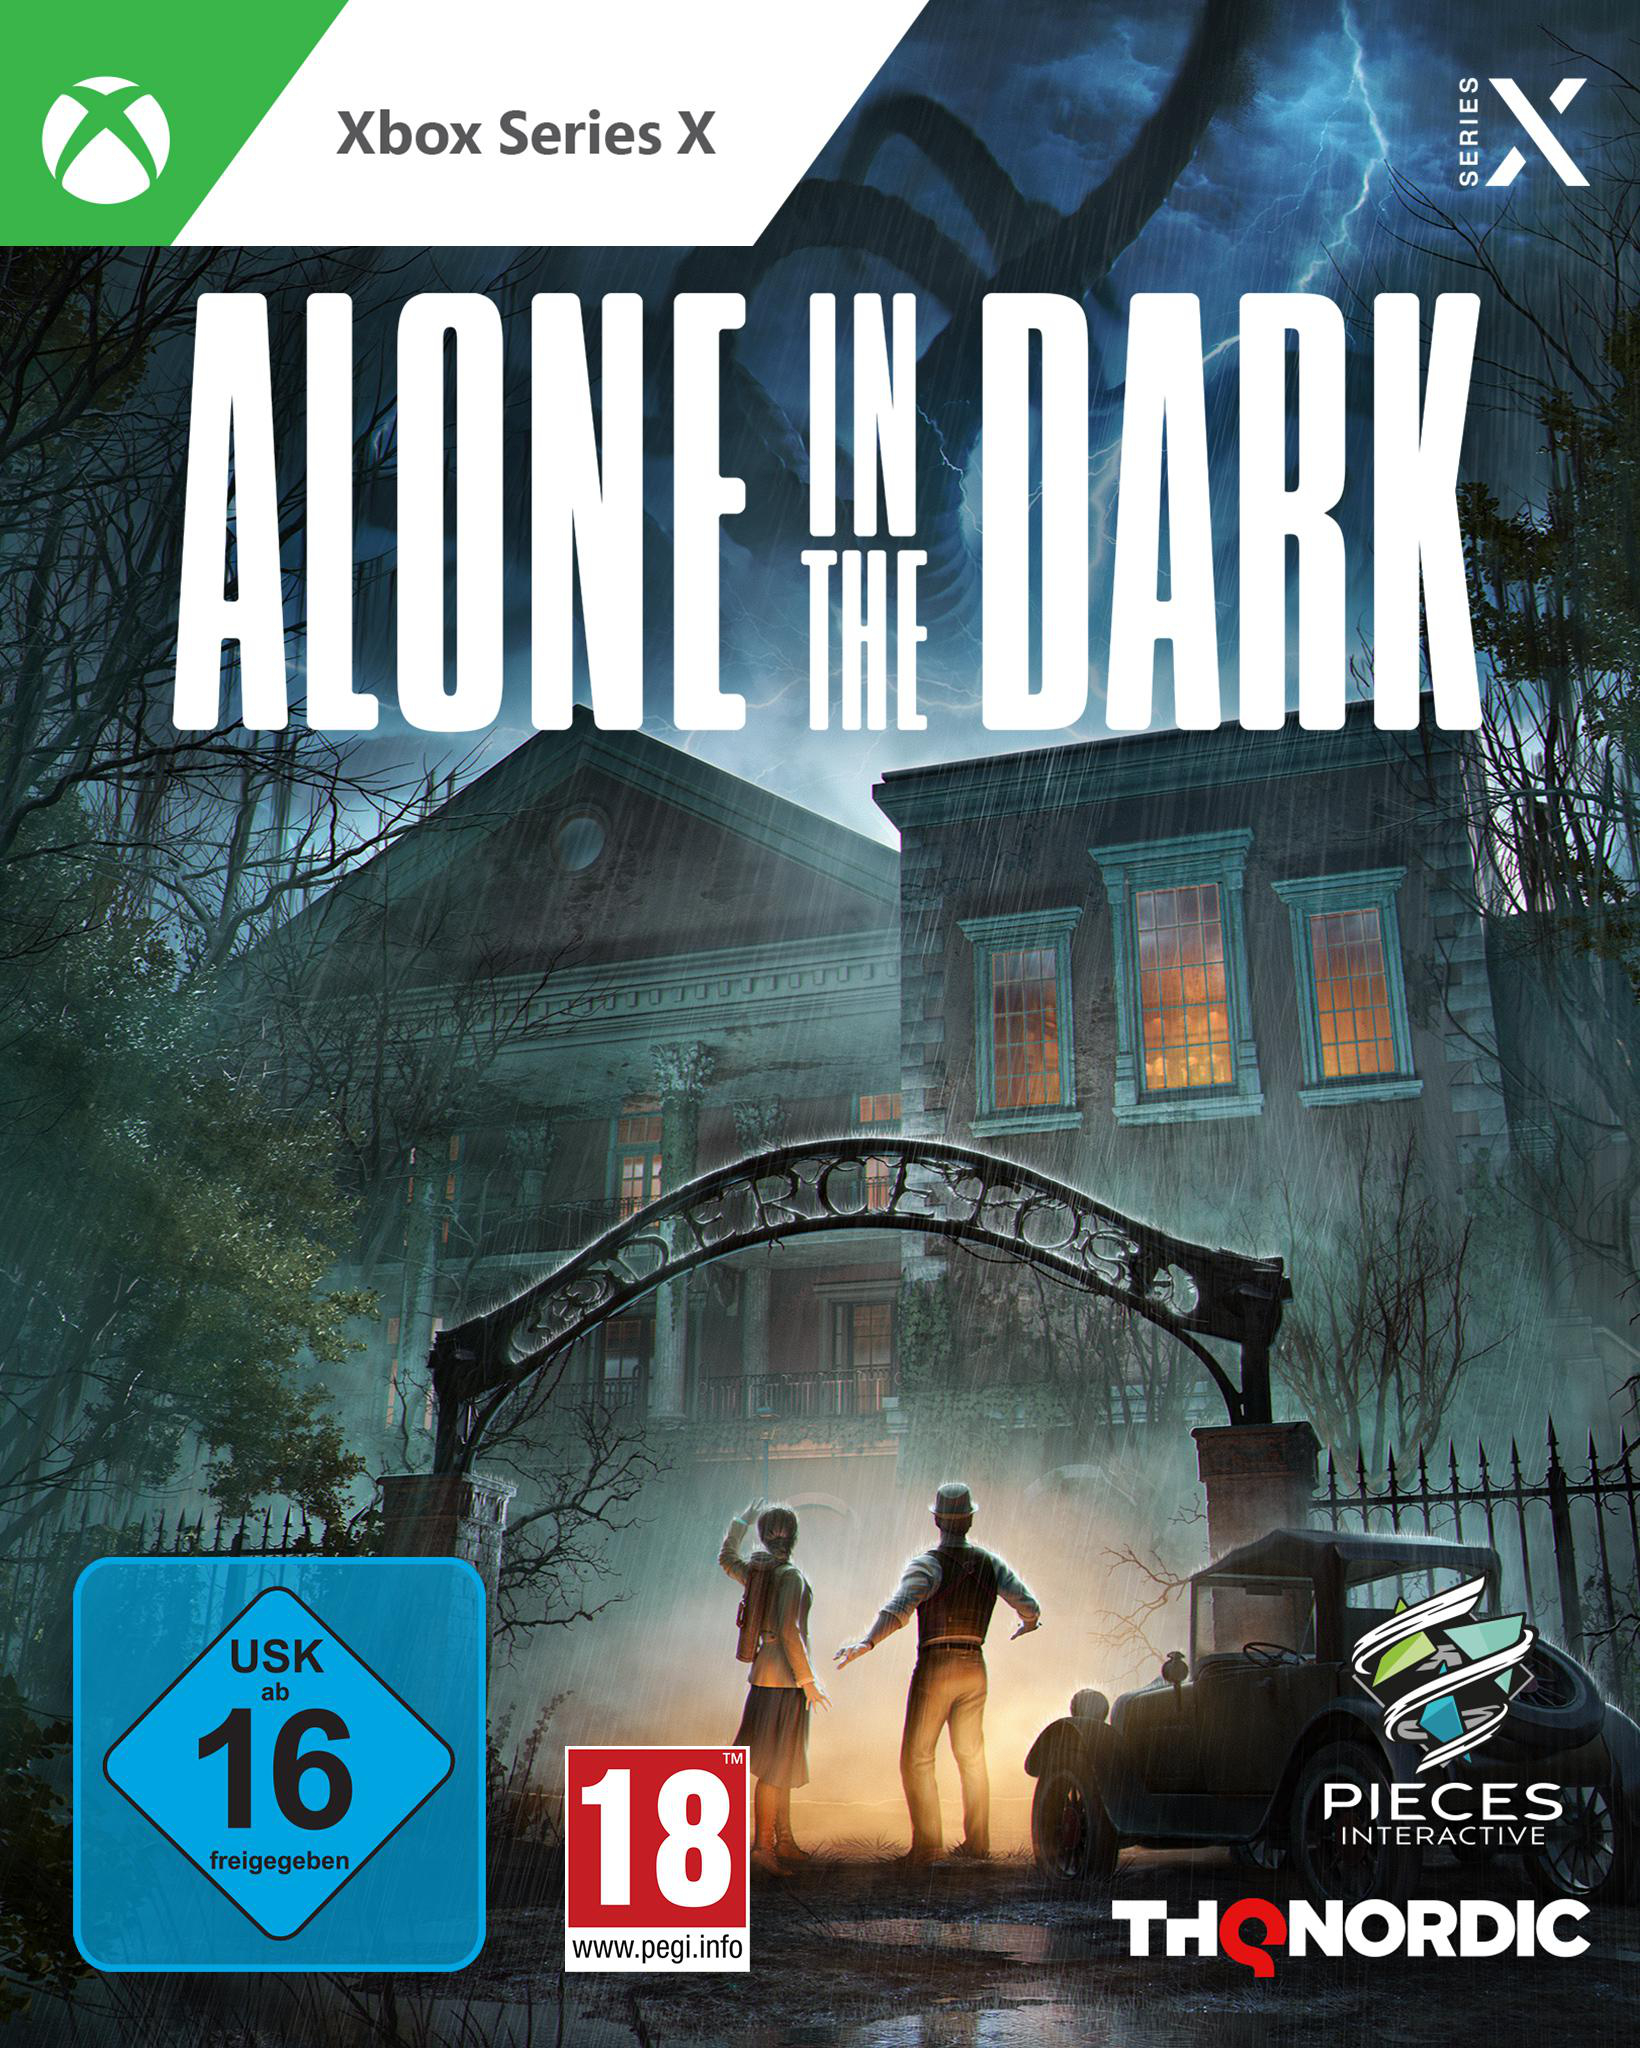 Alone in the Dark - Series X] [Xbox